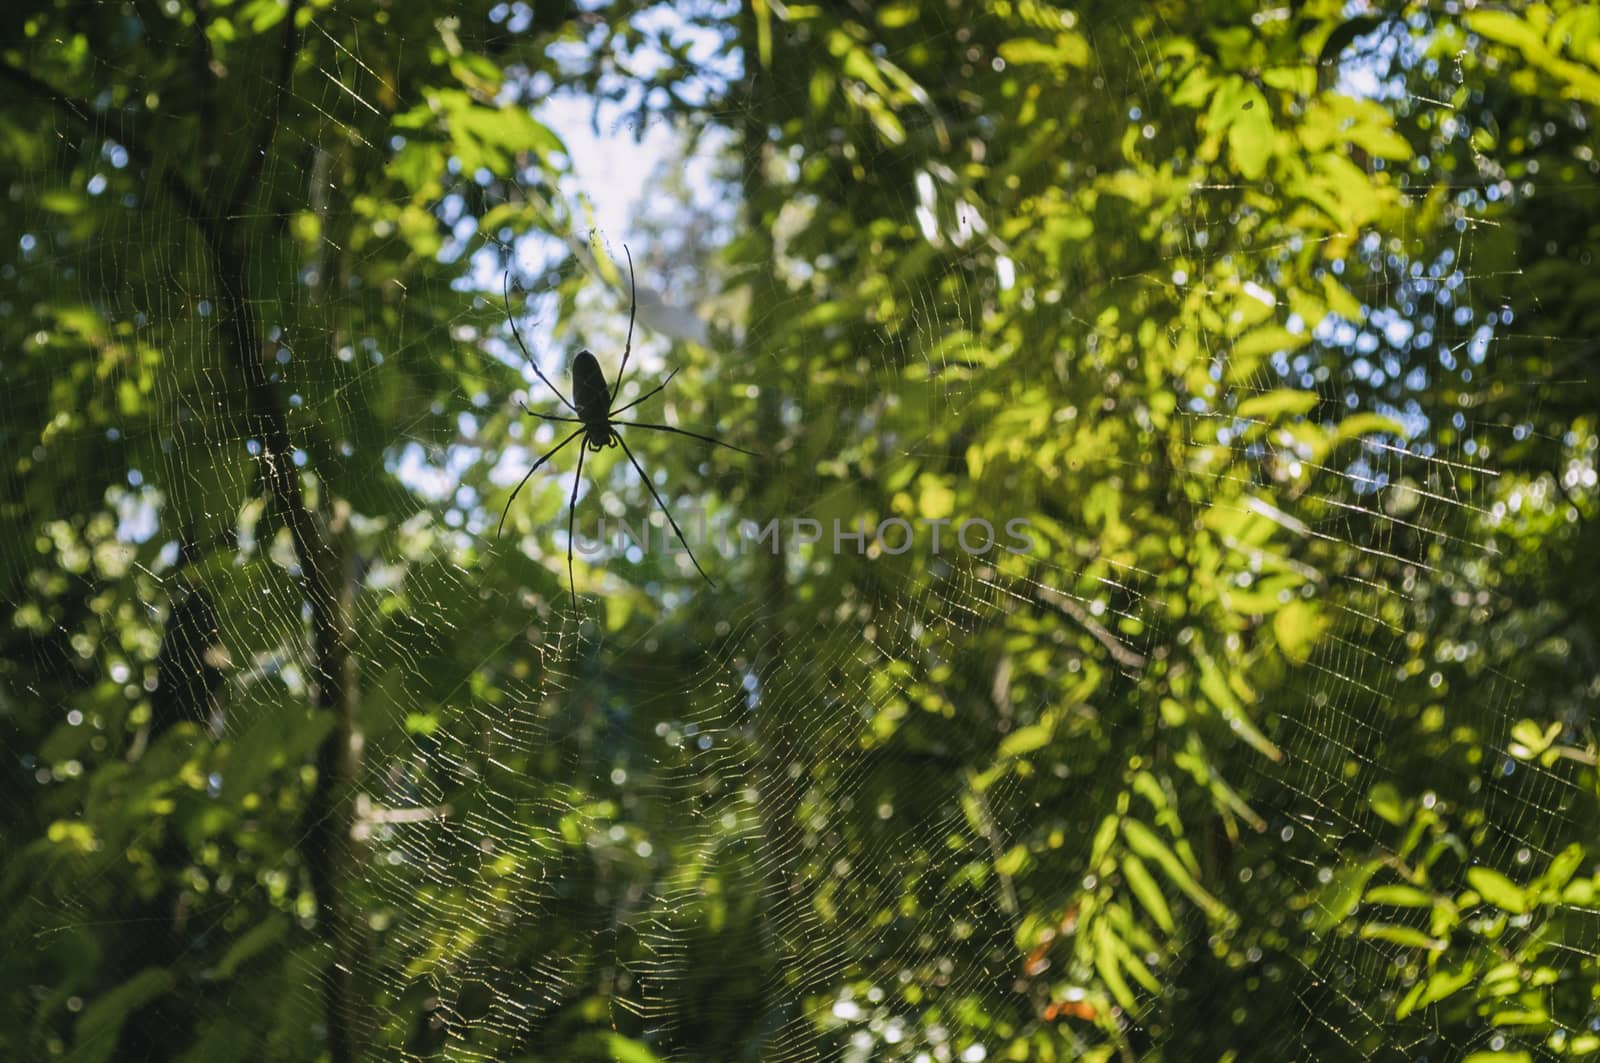 Spider with web by patricklienin